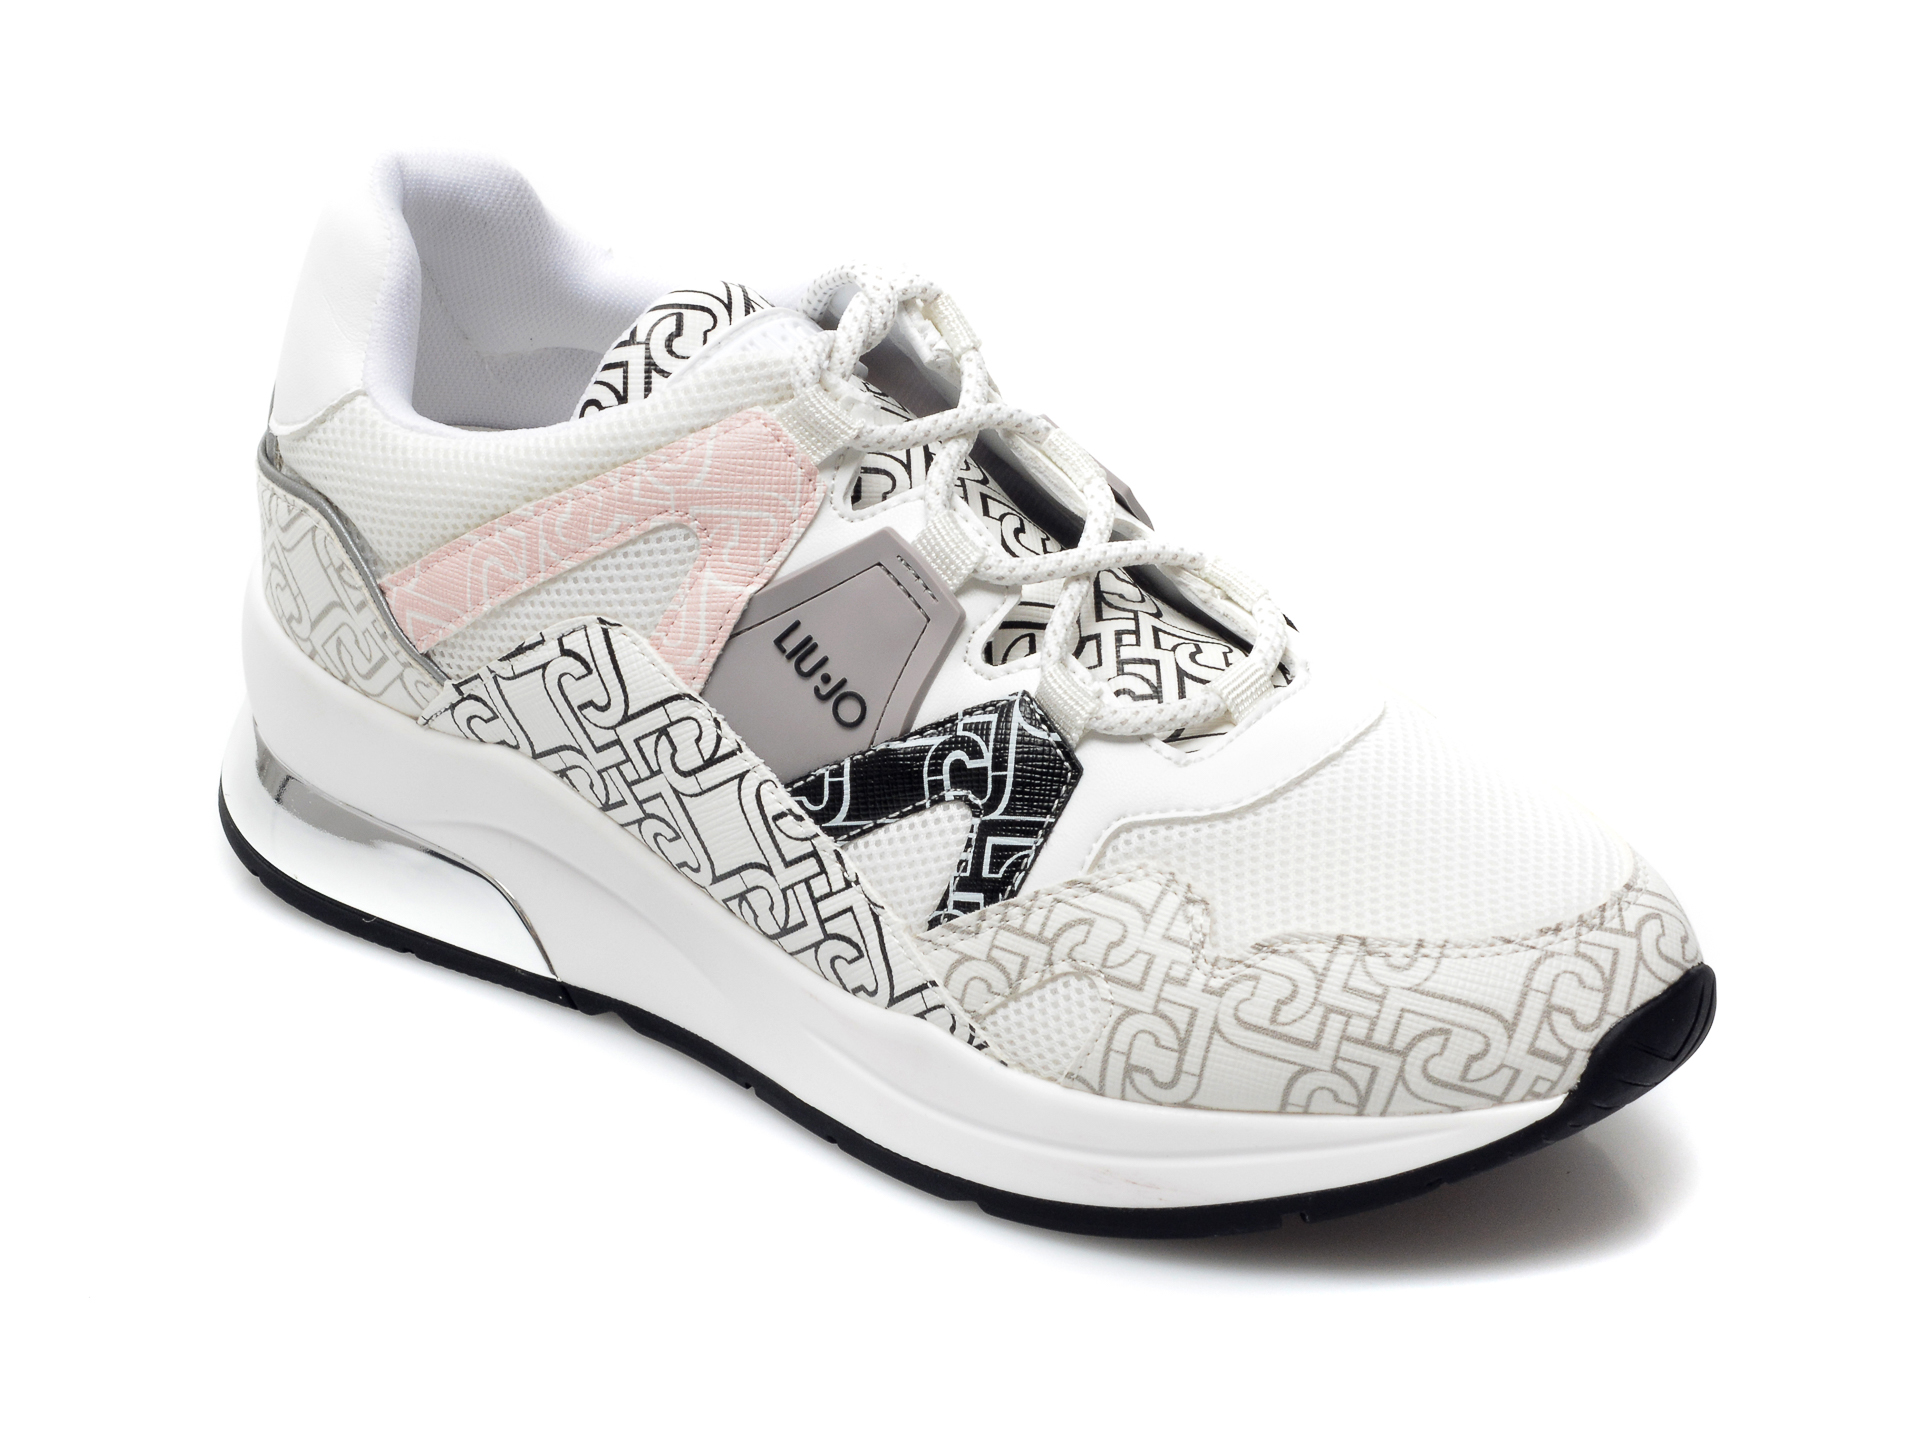 Pantofi sport LIU JO albi, Karlie 4, din material textil si piele ecologica imagine otter.ro